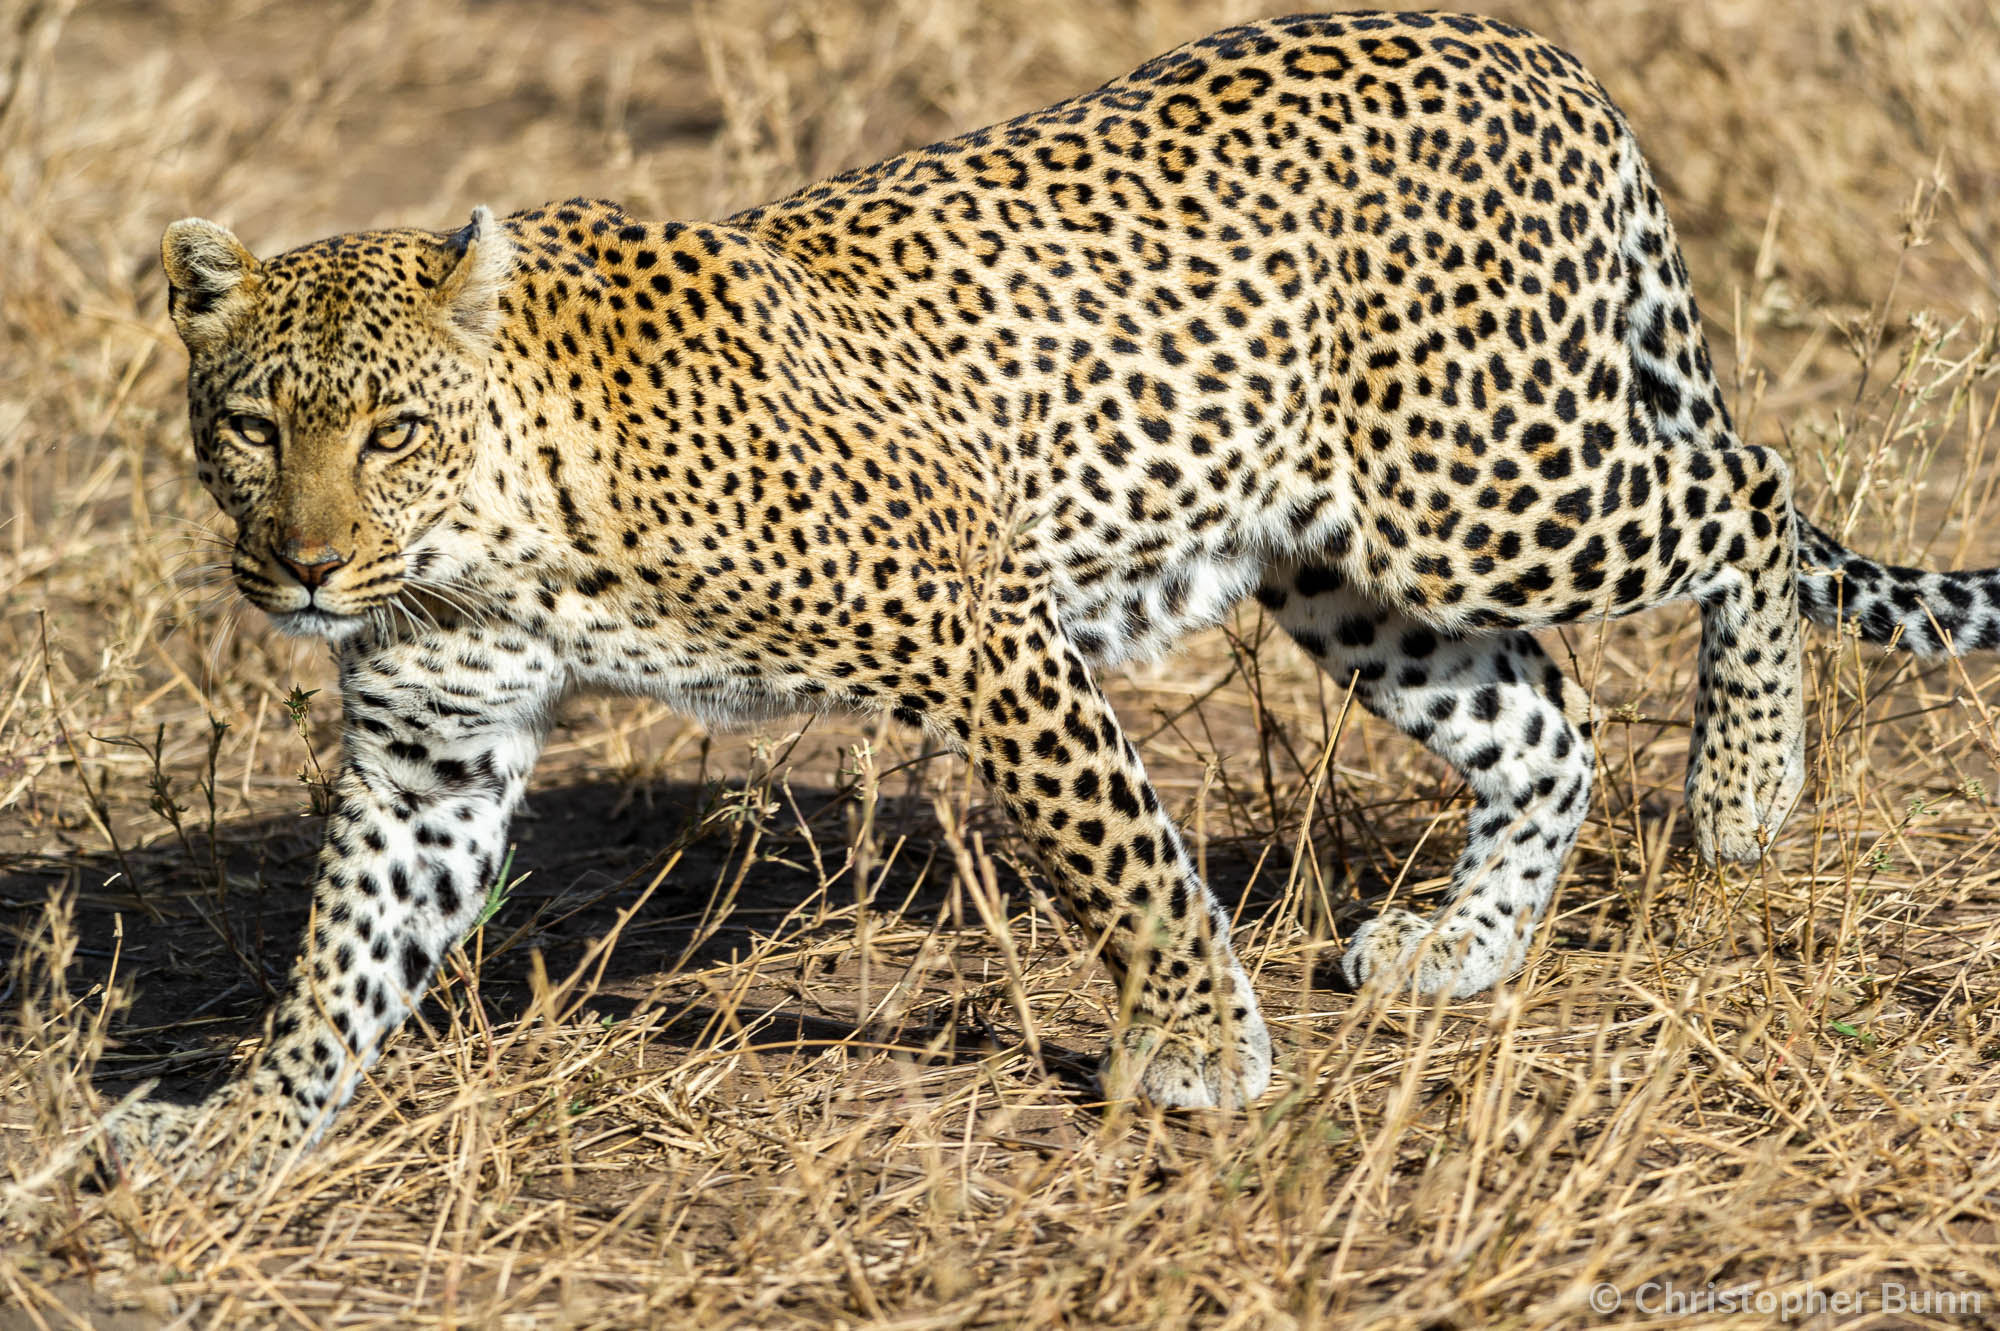 A leopard in Serengeti National Park, Tanzania.